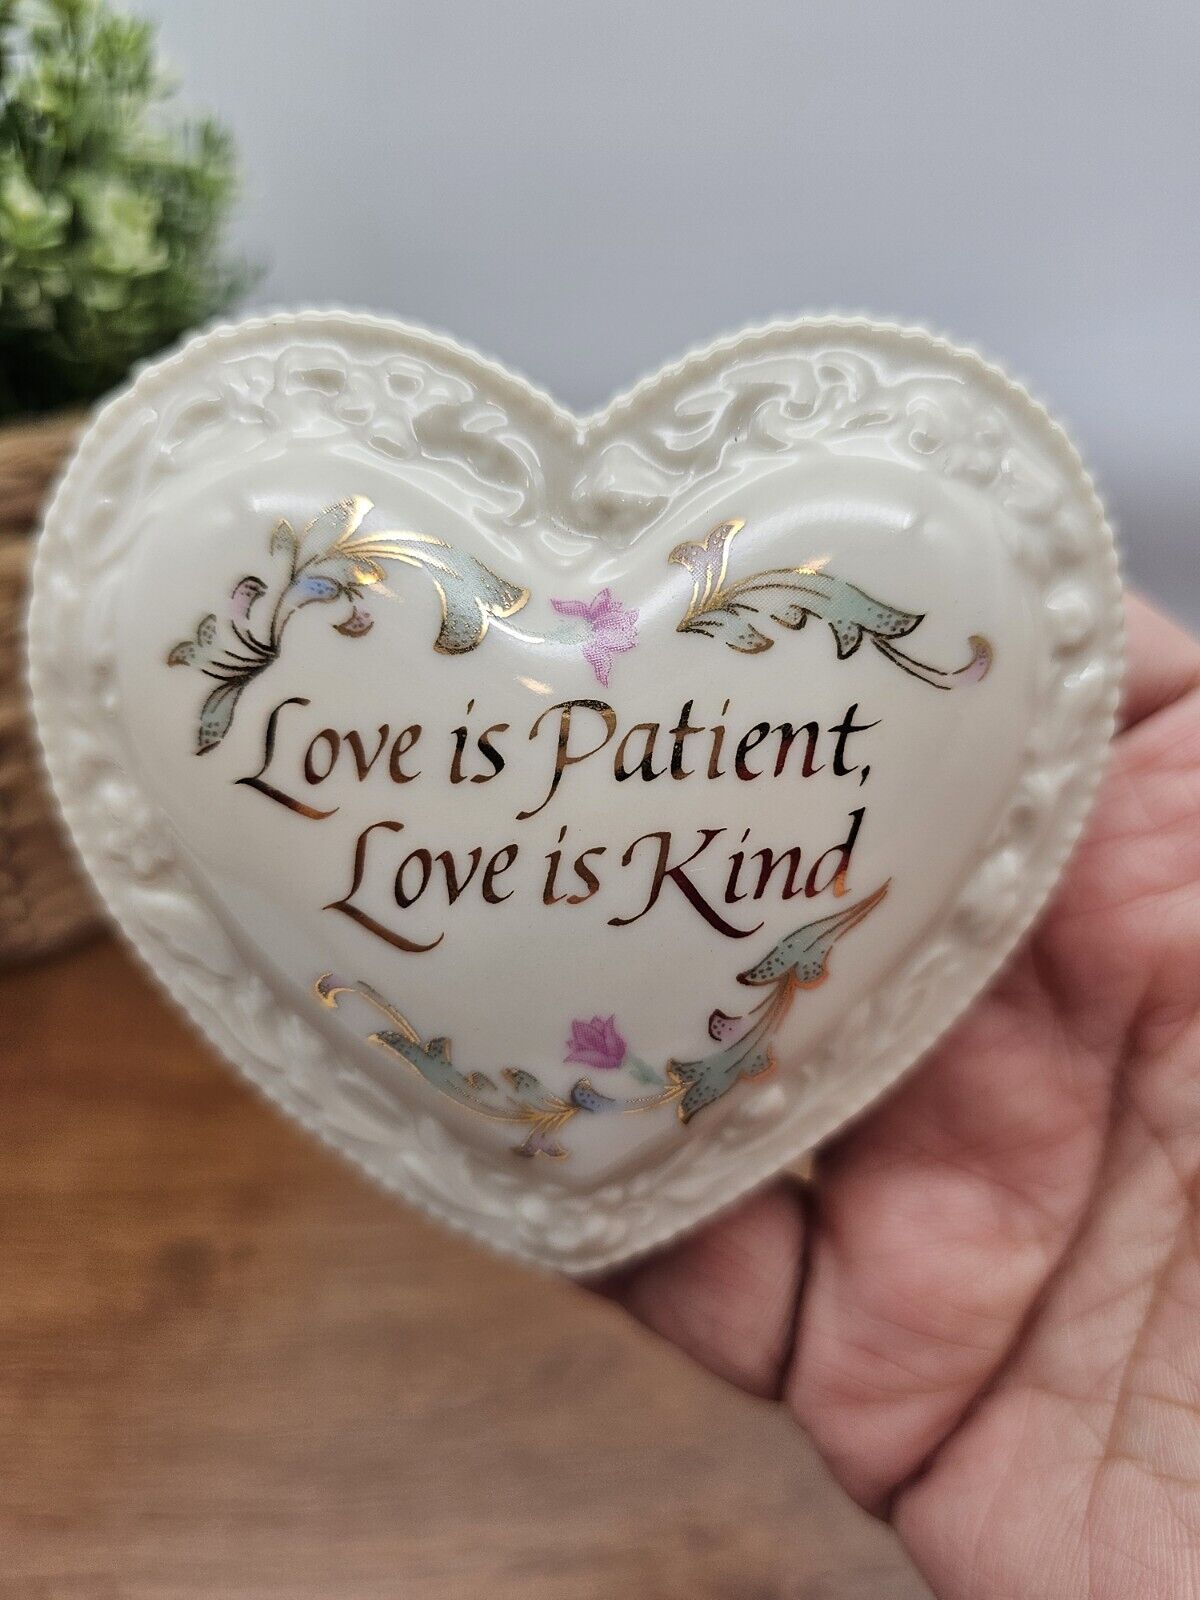 Vintage Lenox Heart Shaped Love is Patient, Love is Kind Porcelain Trinket Box